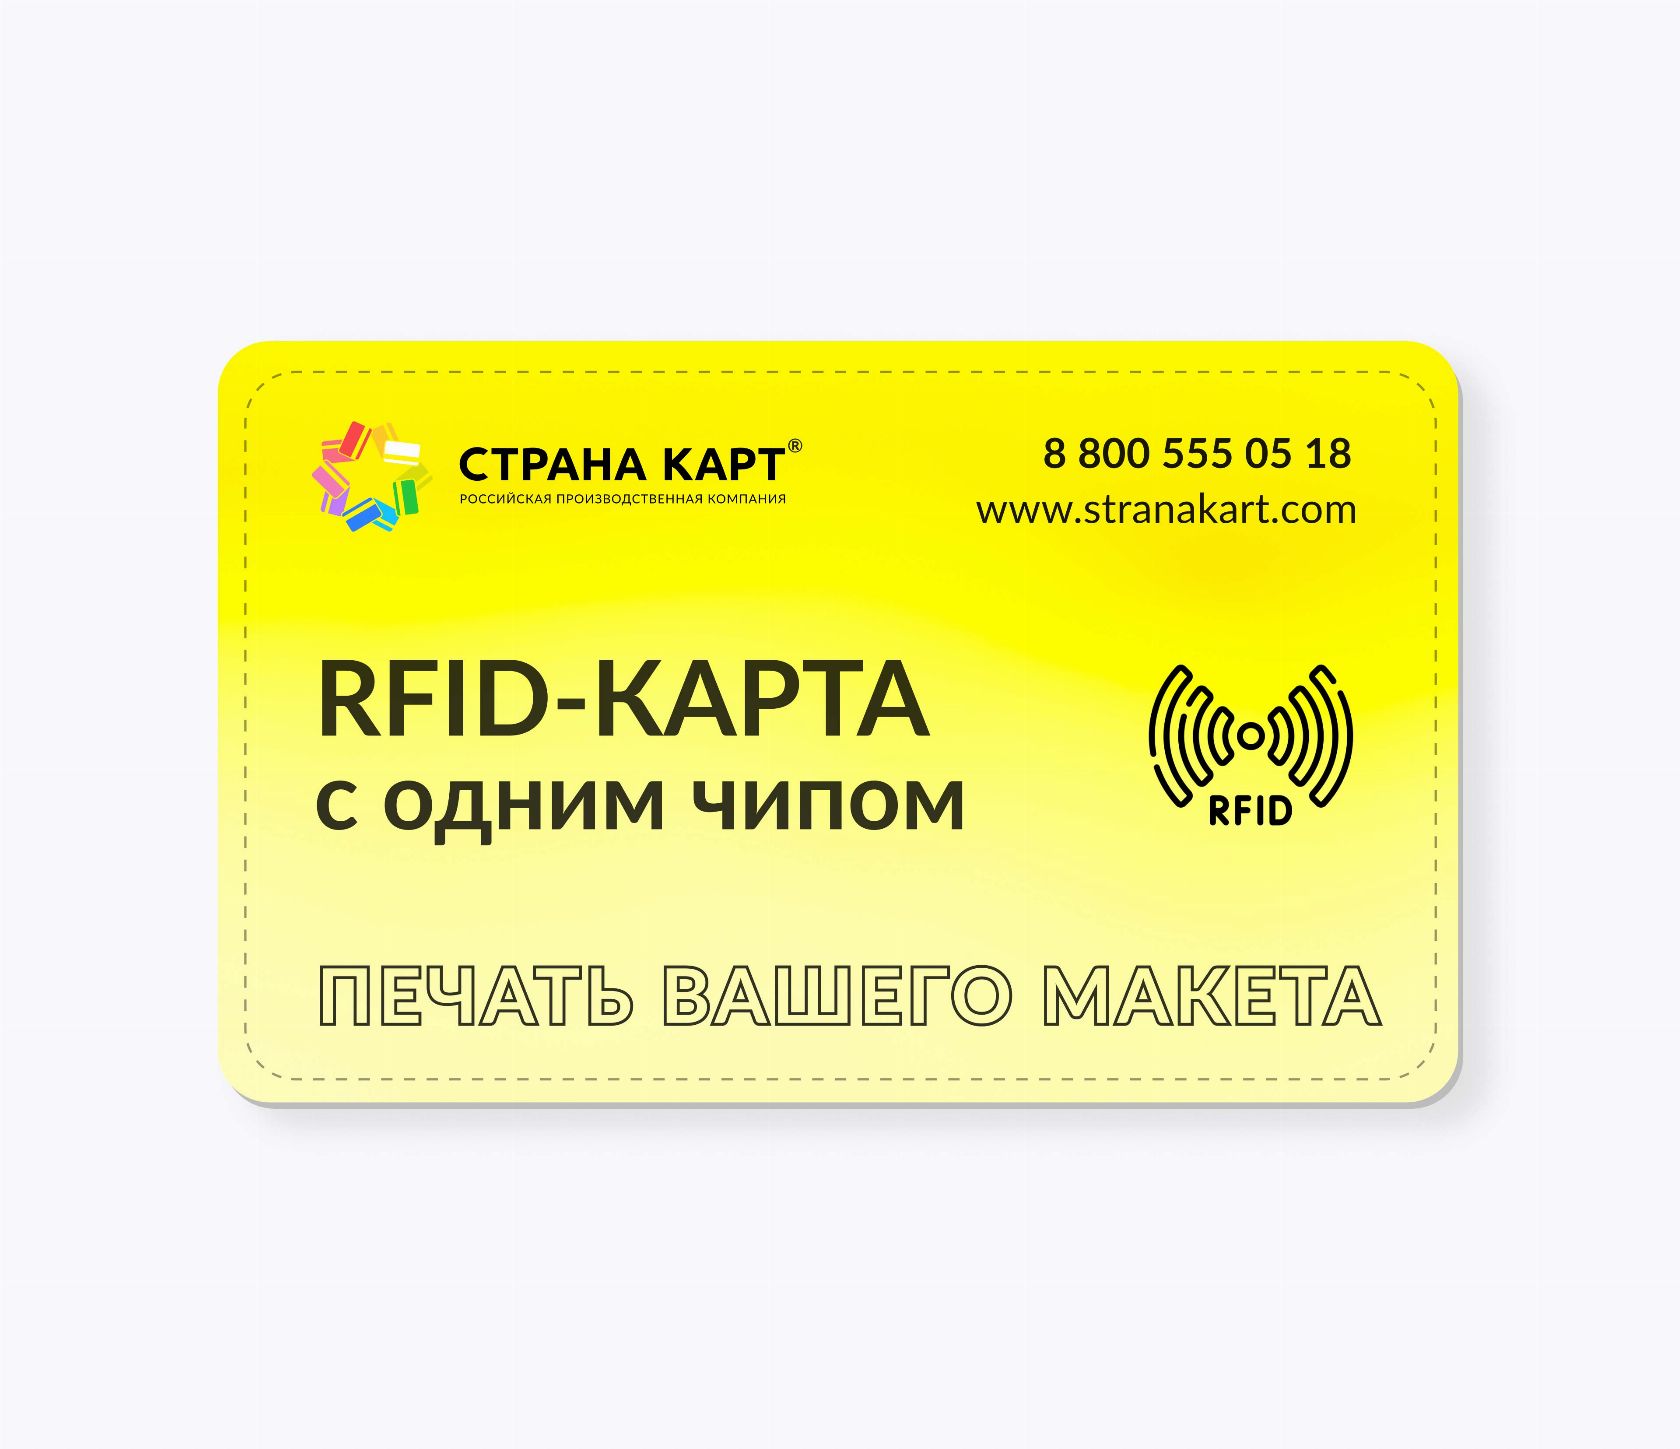 RFID-карты с чипом NXP MIFARE Plus SE 1k 4 byte nUID печать вашего макета RFID-карты с чипом NXP MIFARE Plus SE 1k 4 byte nUID